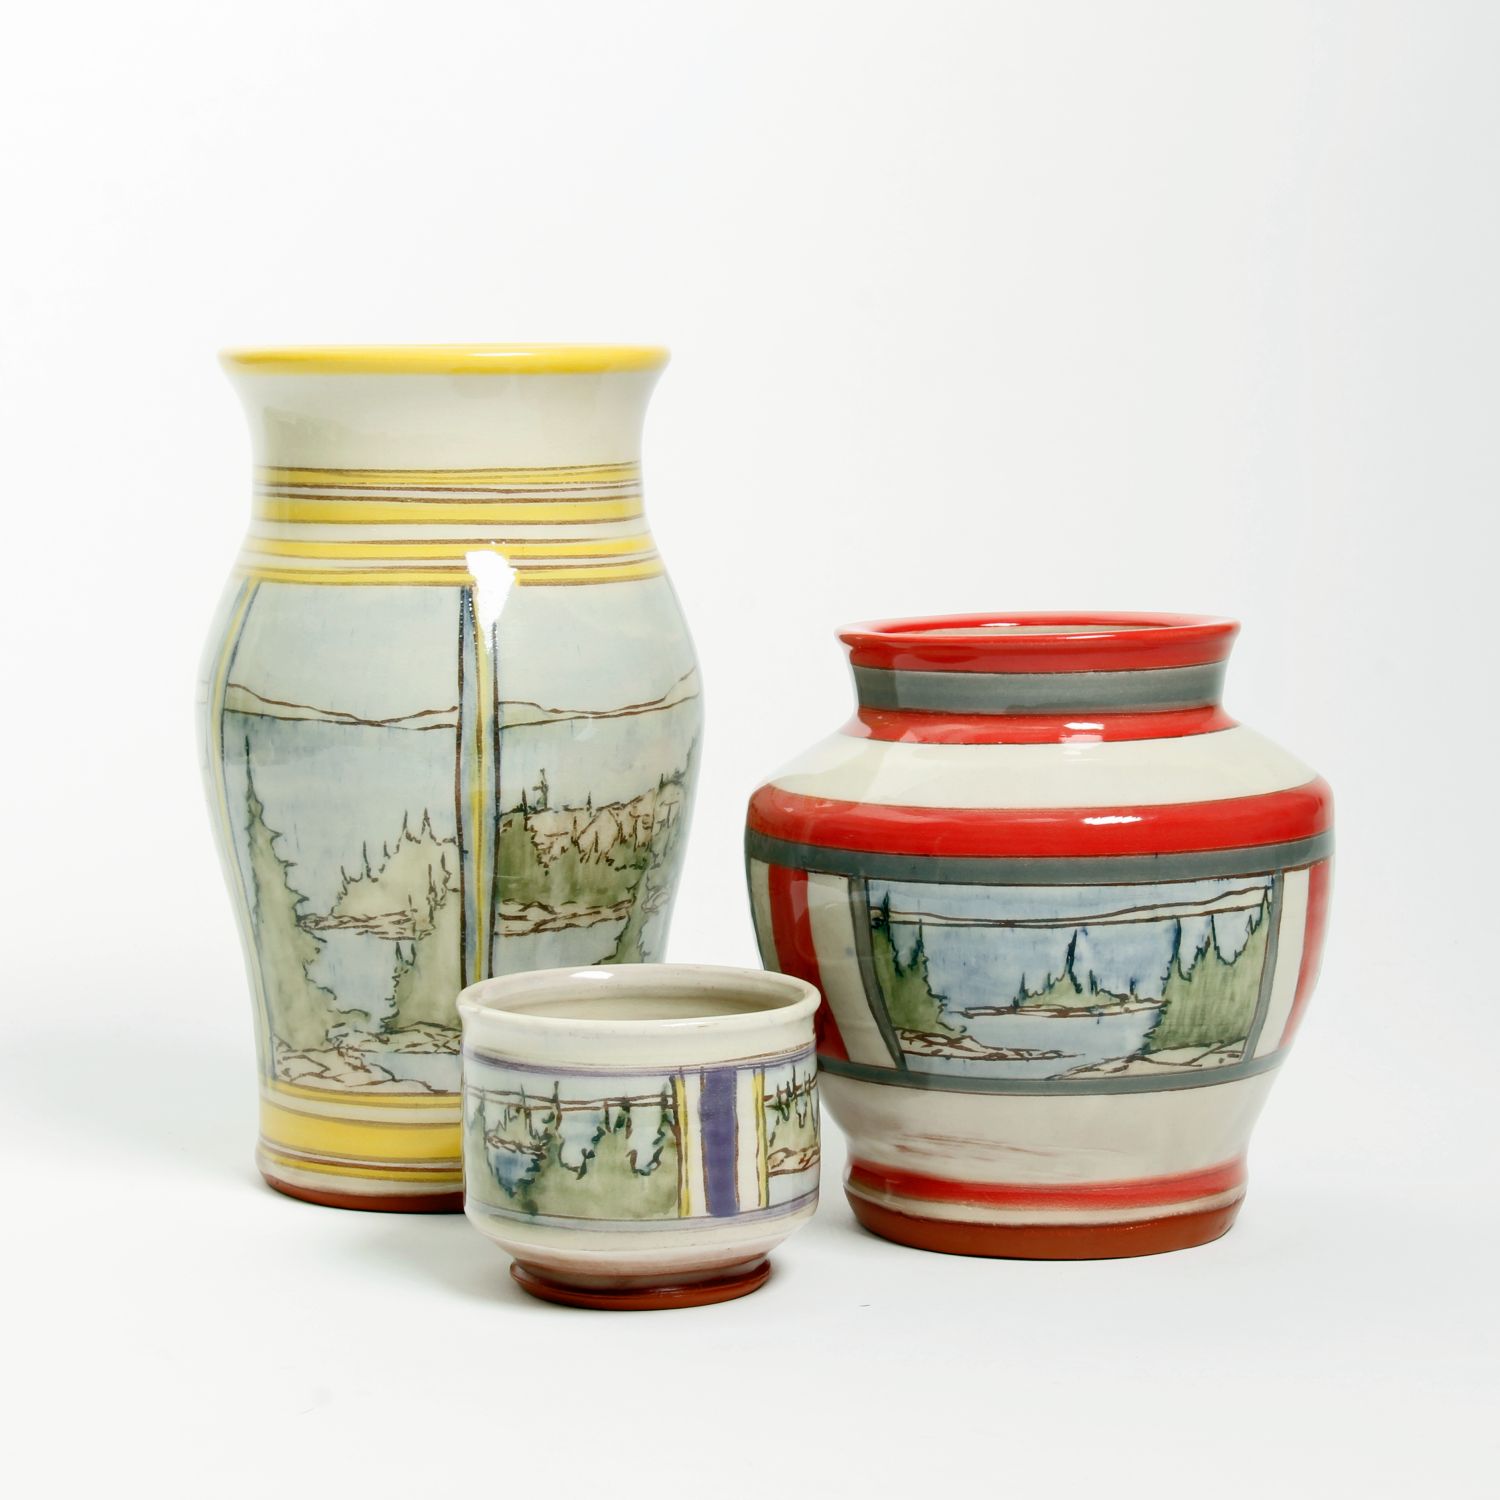 Sean Robinson: Large Vase Product Image 3 of 4